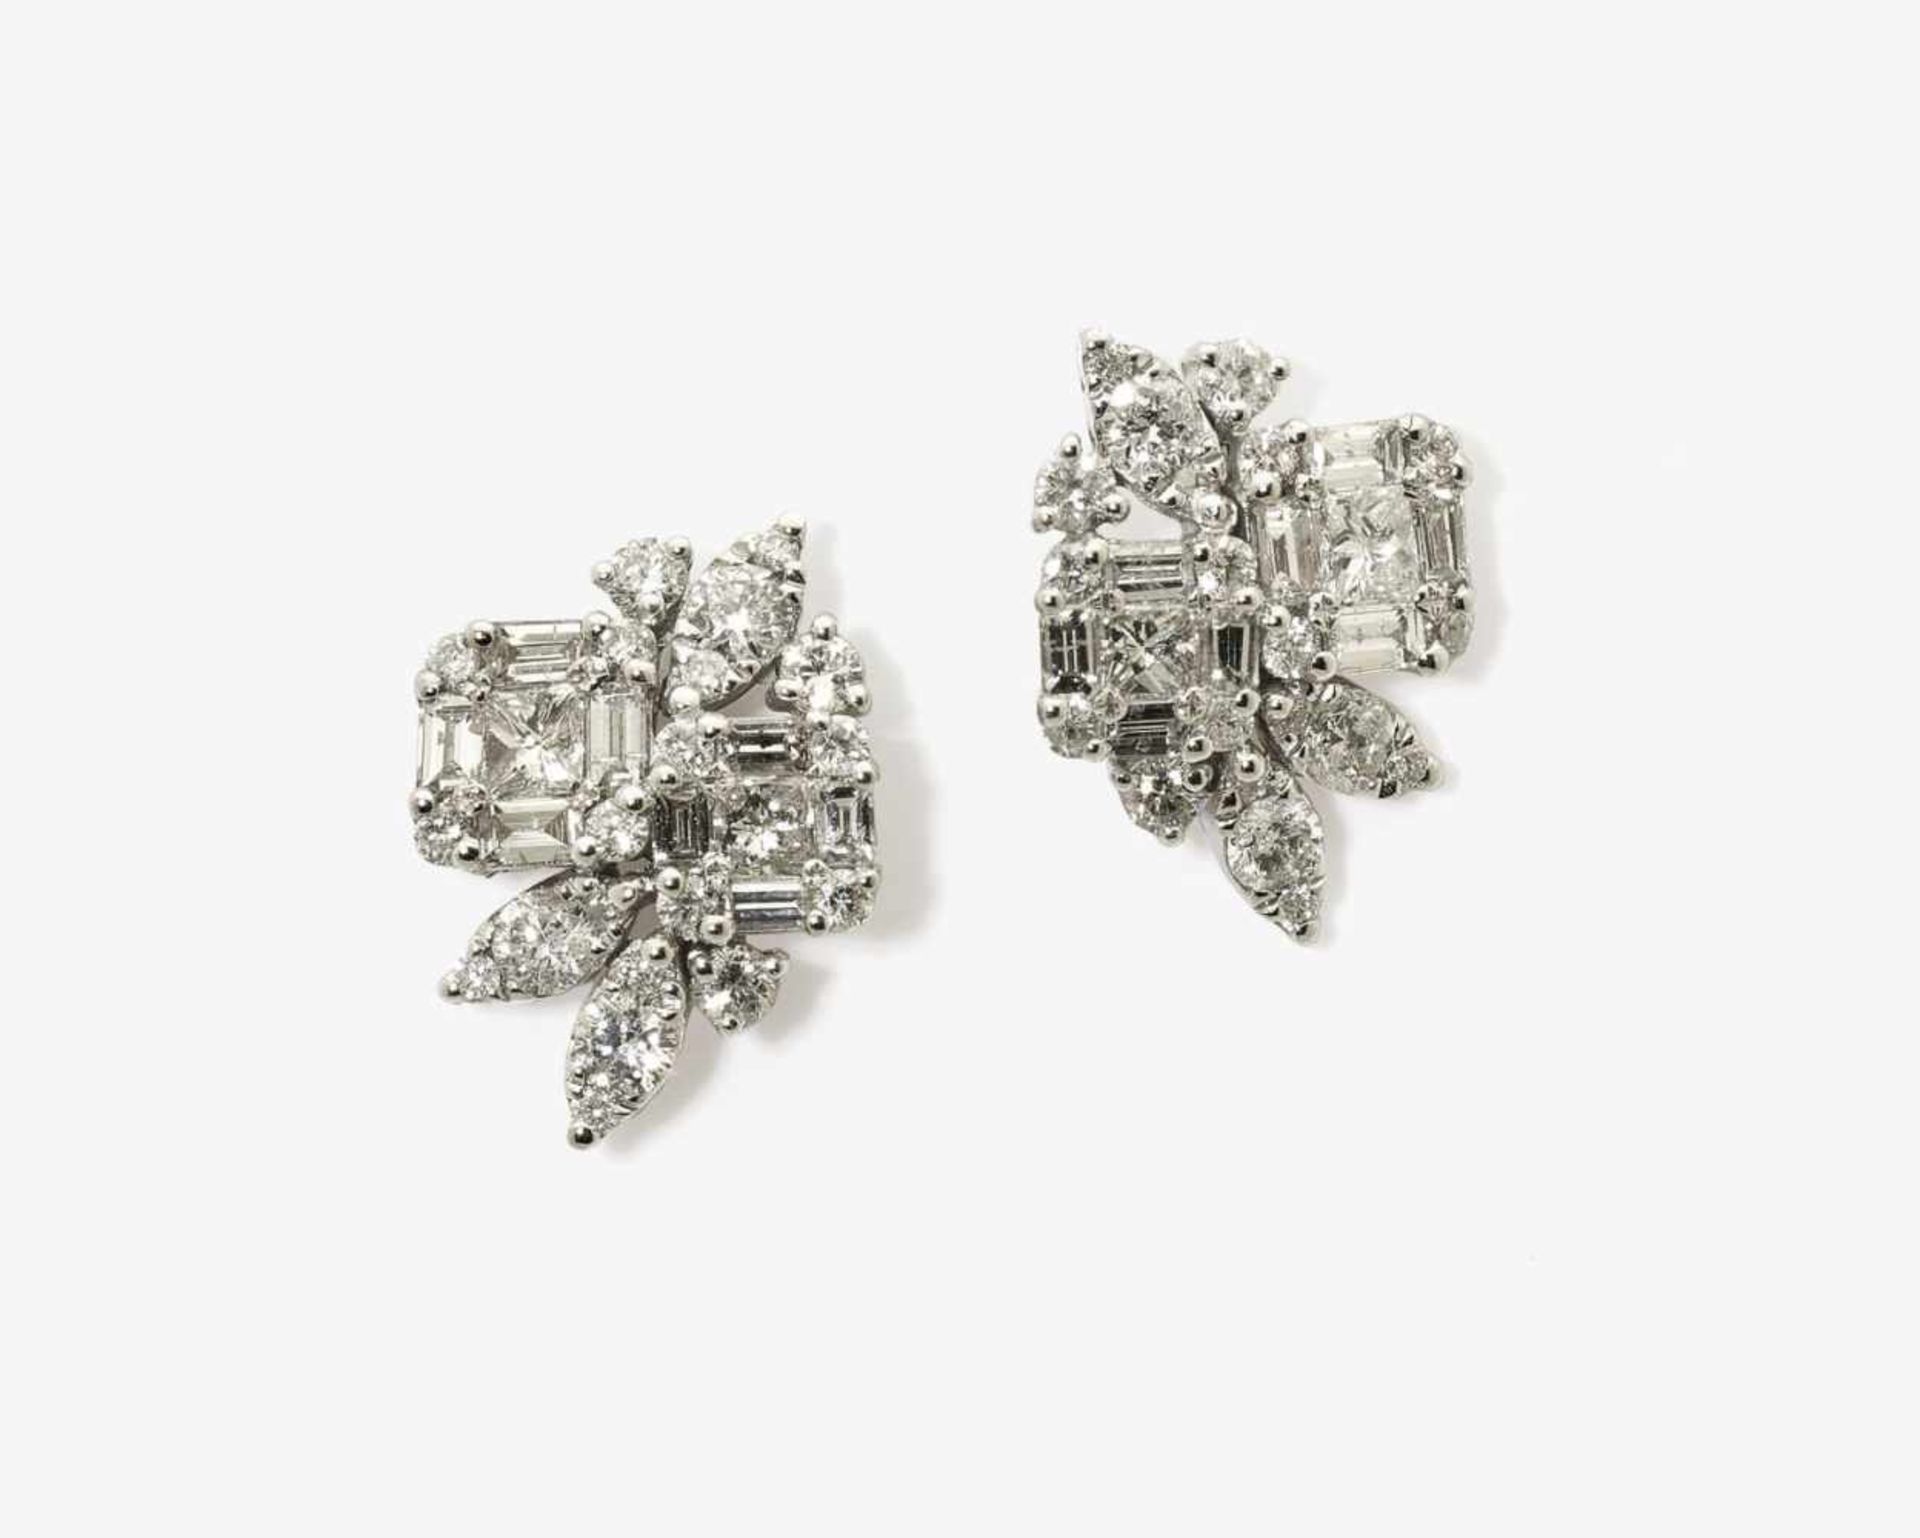 A Pair of Stylised Floral Diamond Earrings